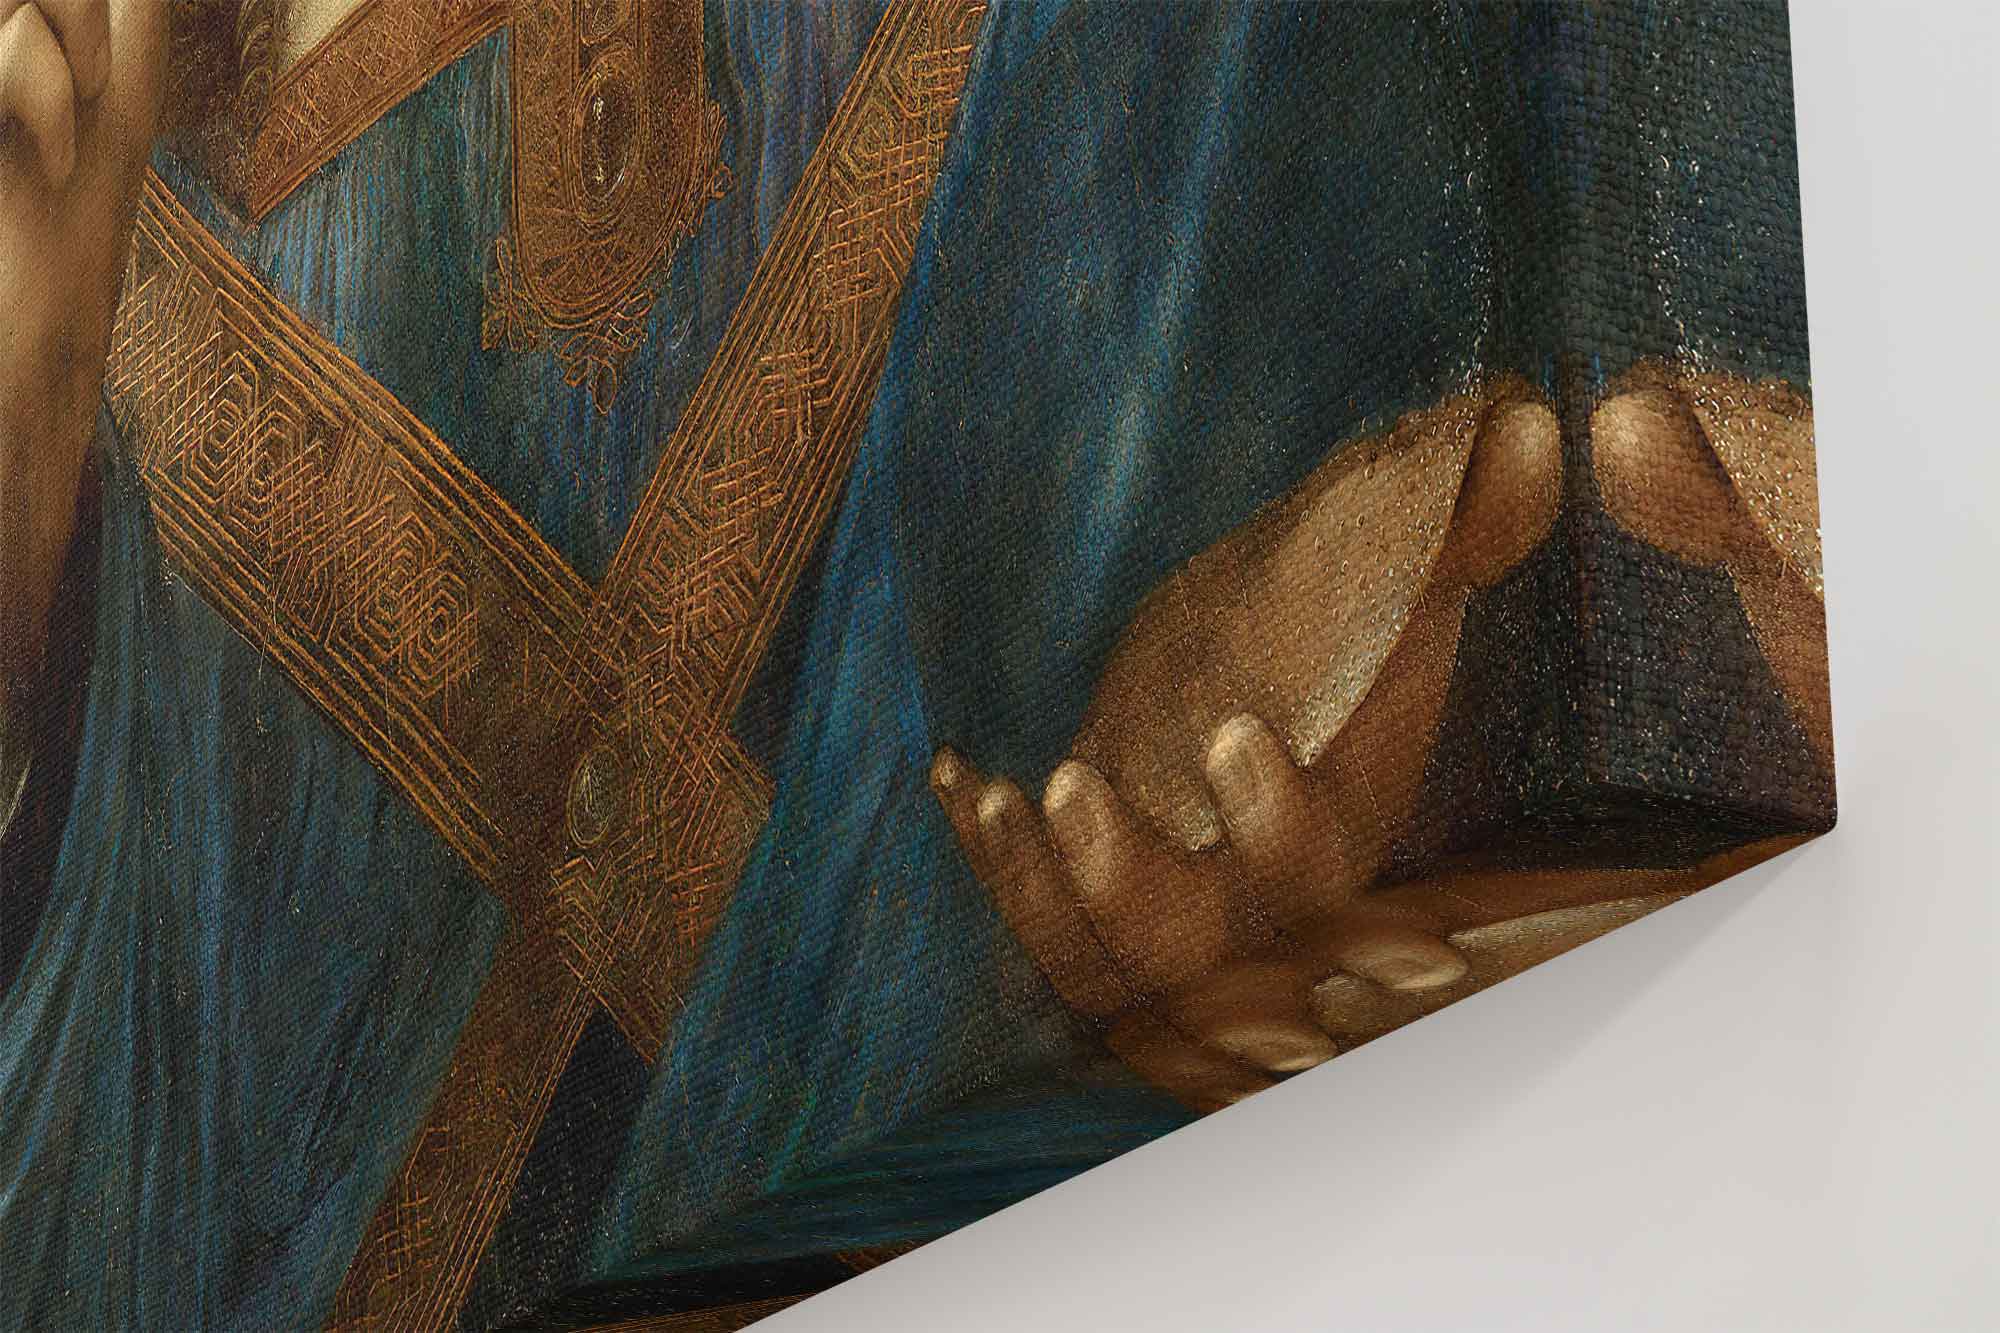 Salvador Mundi Canvas, The Lost Leonardo, Leonardo Da Vinci - Salvador Mundi Canvas Print - WallArtPrints4U